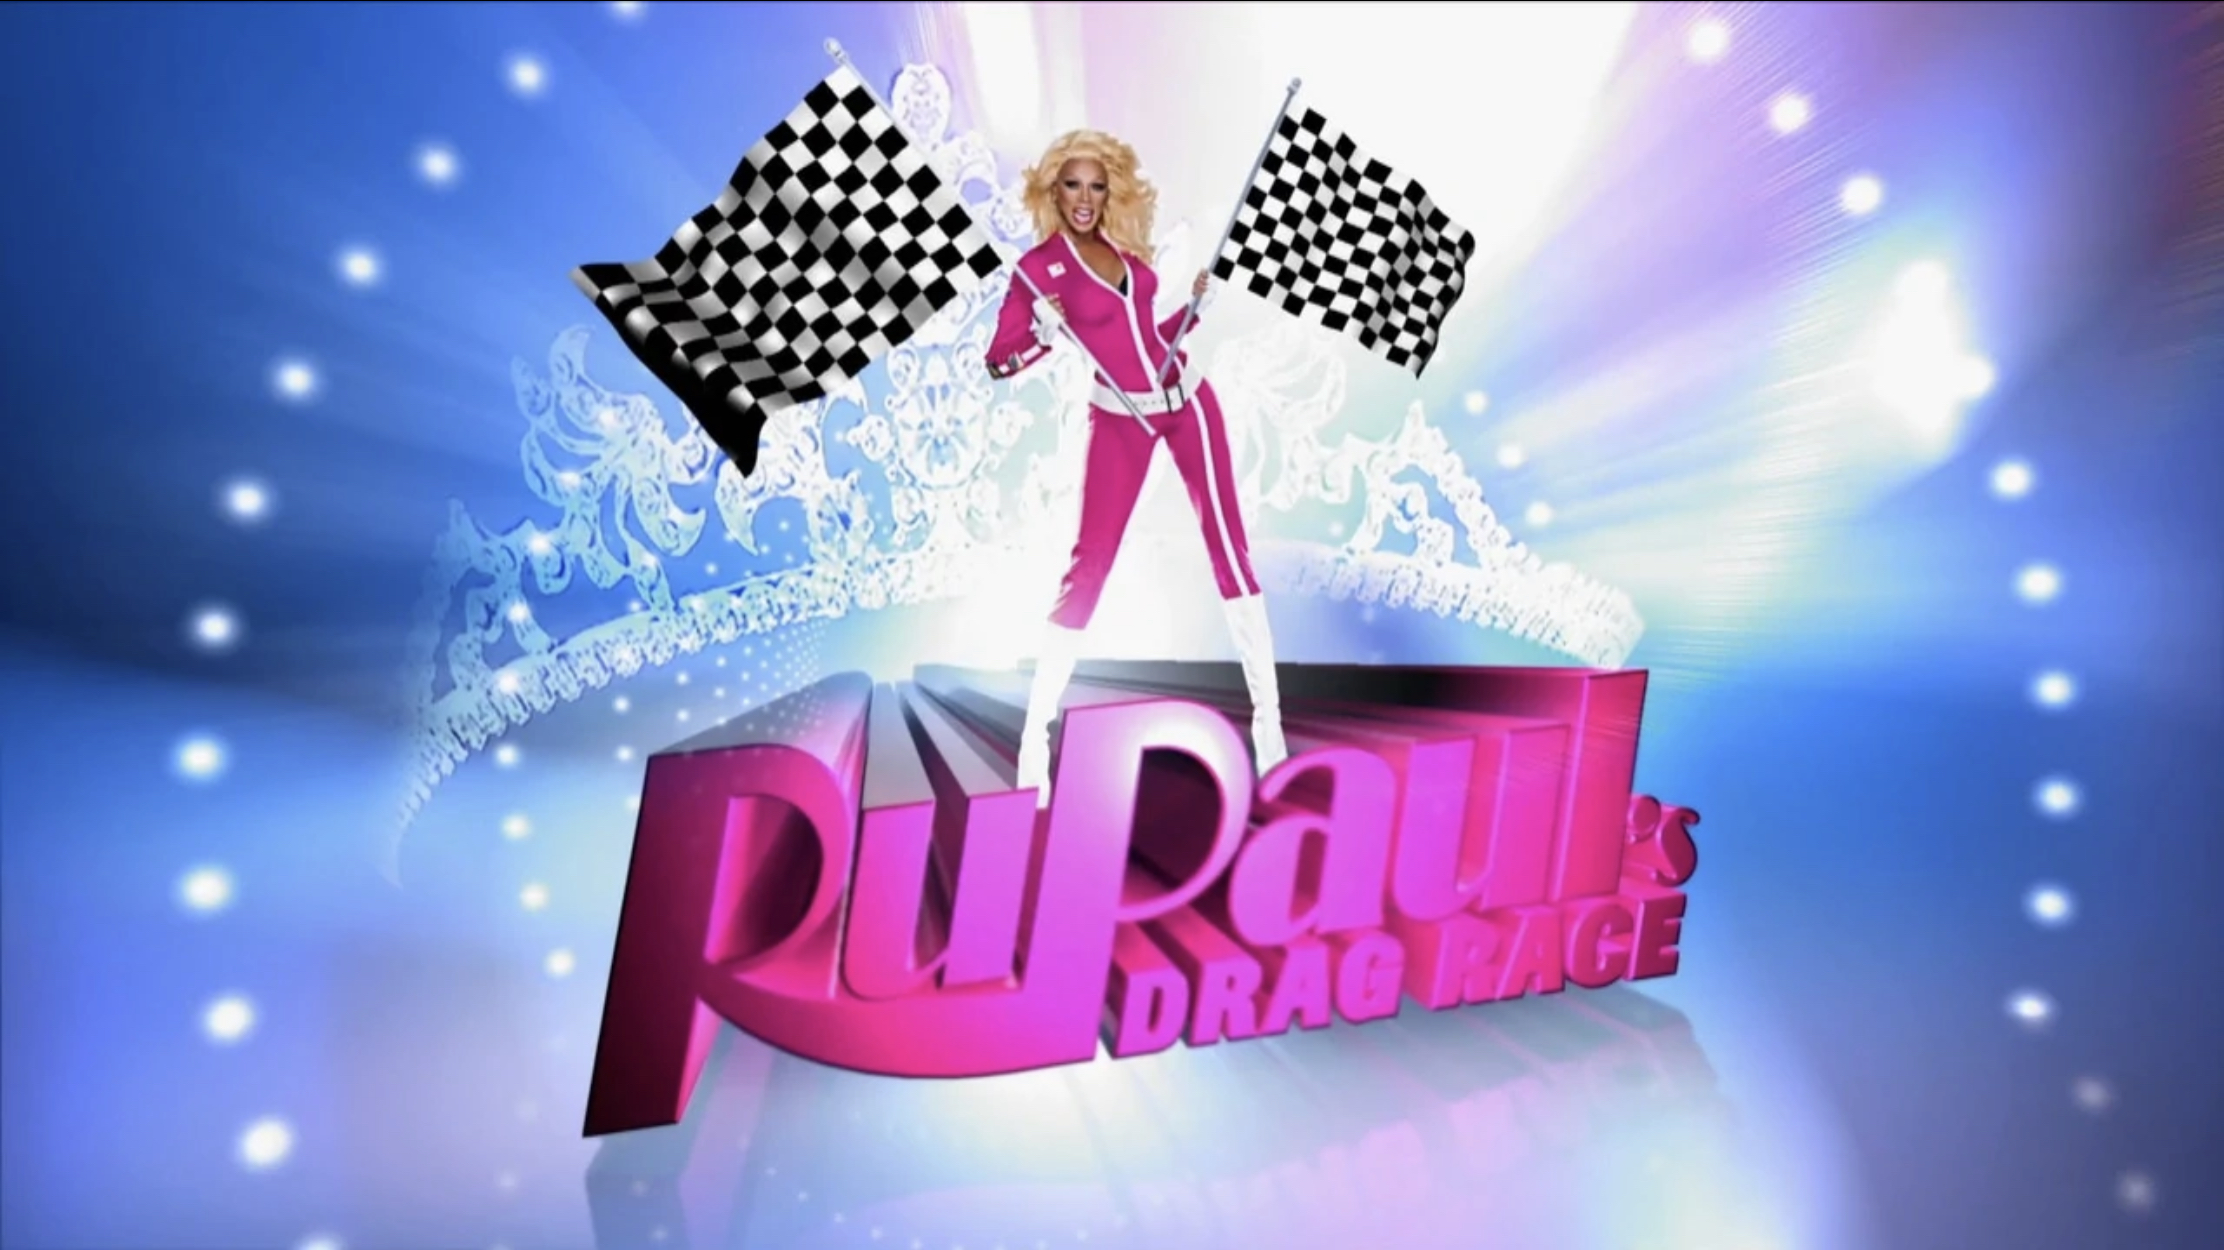 RuPaul's Drag Race (Season 11), RuPaul's Drag Race Wiki